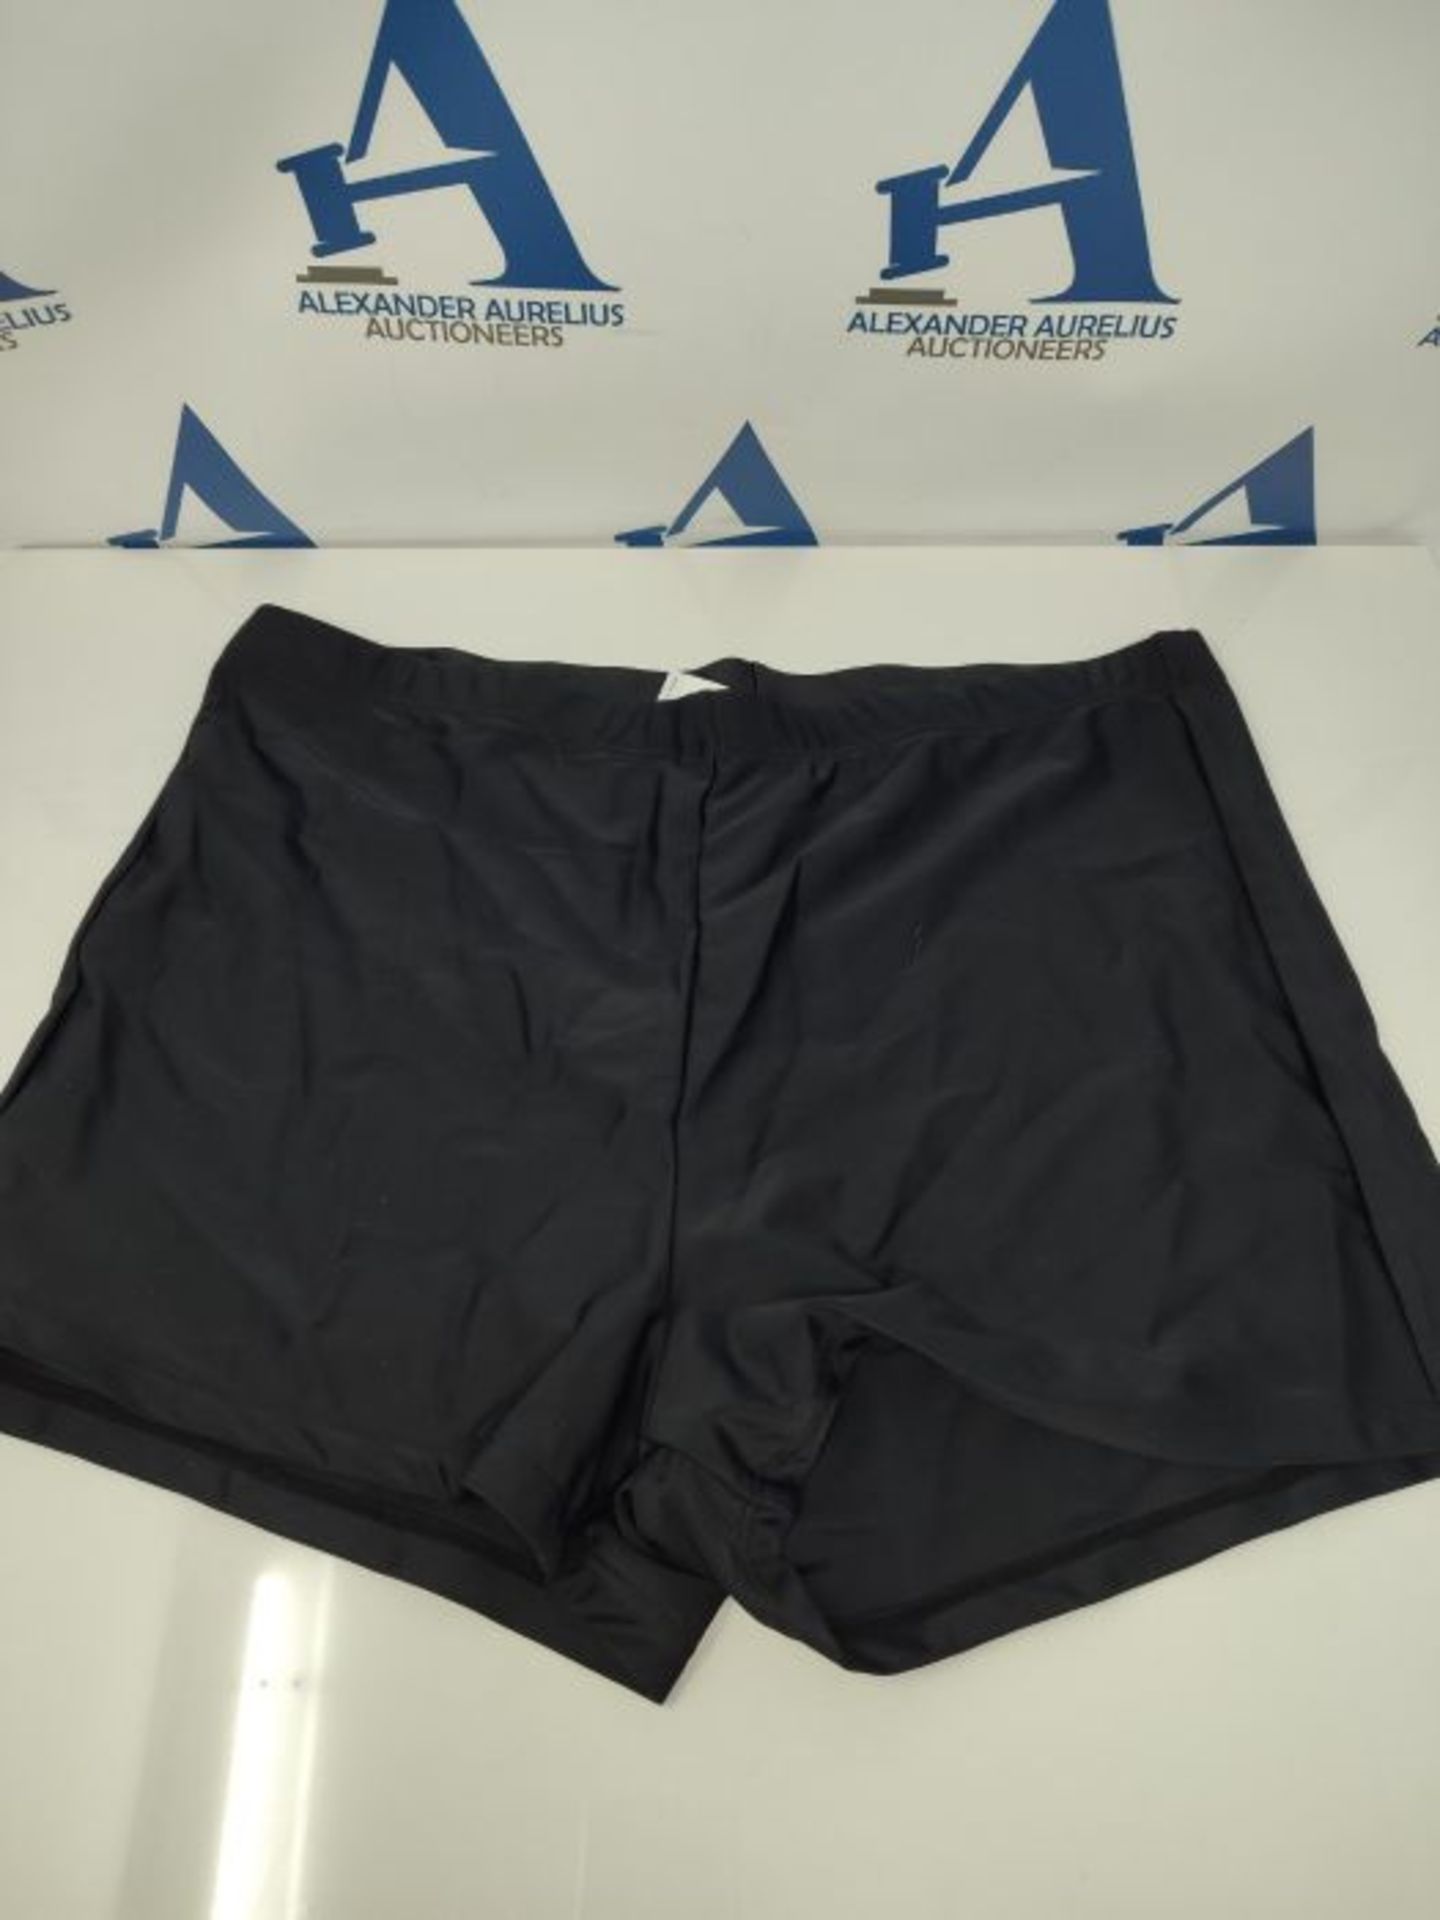 Halcurt Women's Tankini Swimsuit Blouson Swimsuit Plunge Boy Shorts Swimwear, Black/Pa - Image 3 of 5